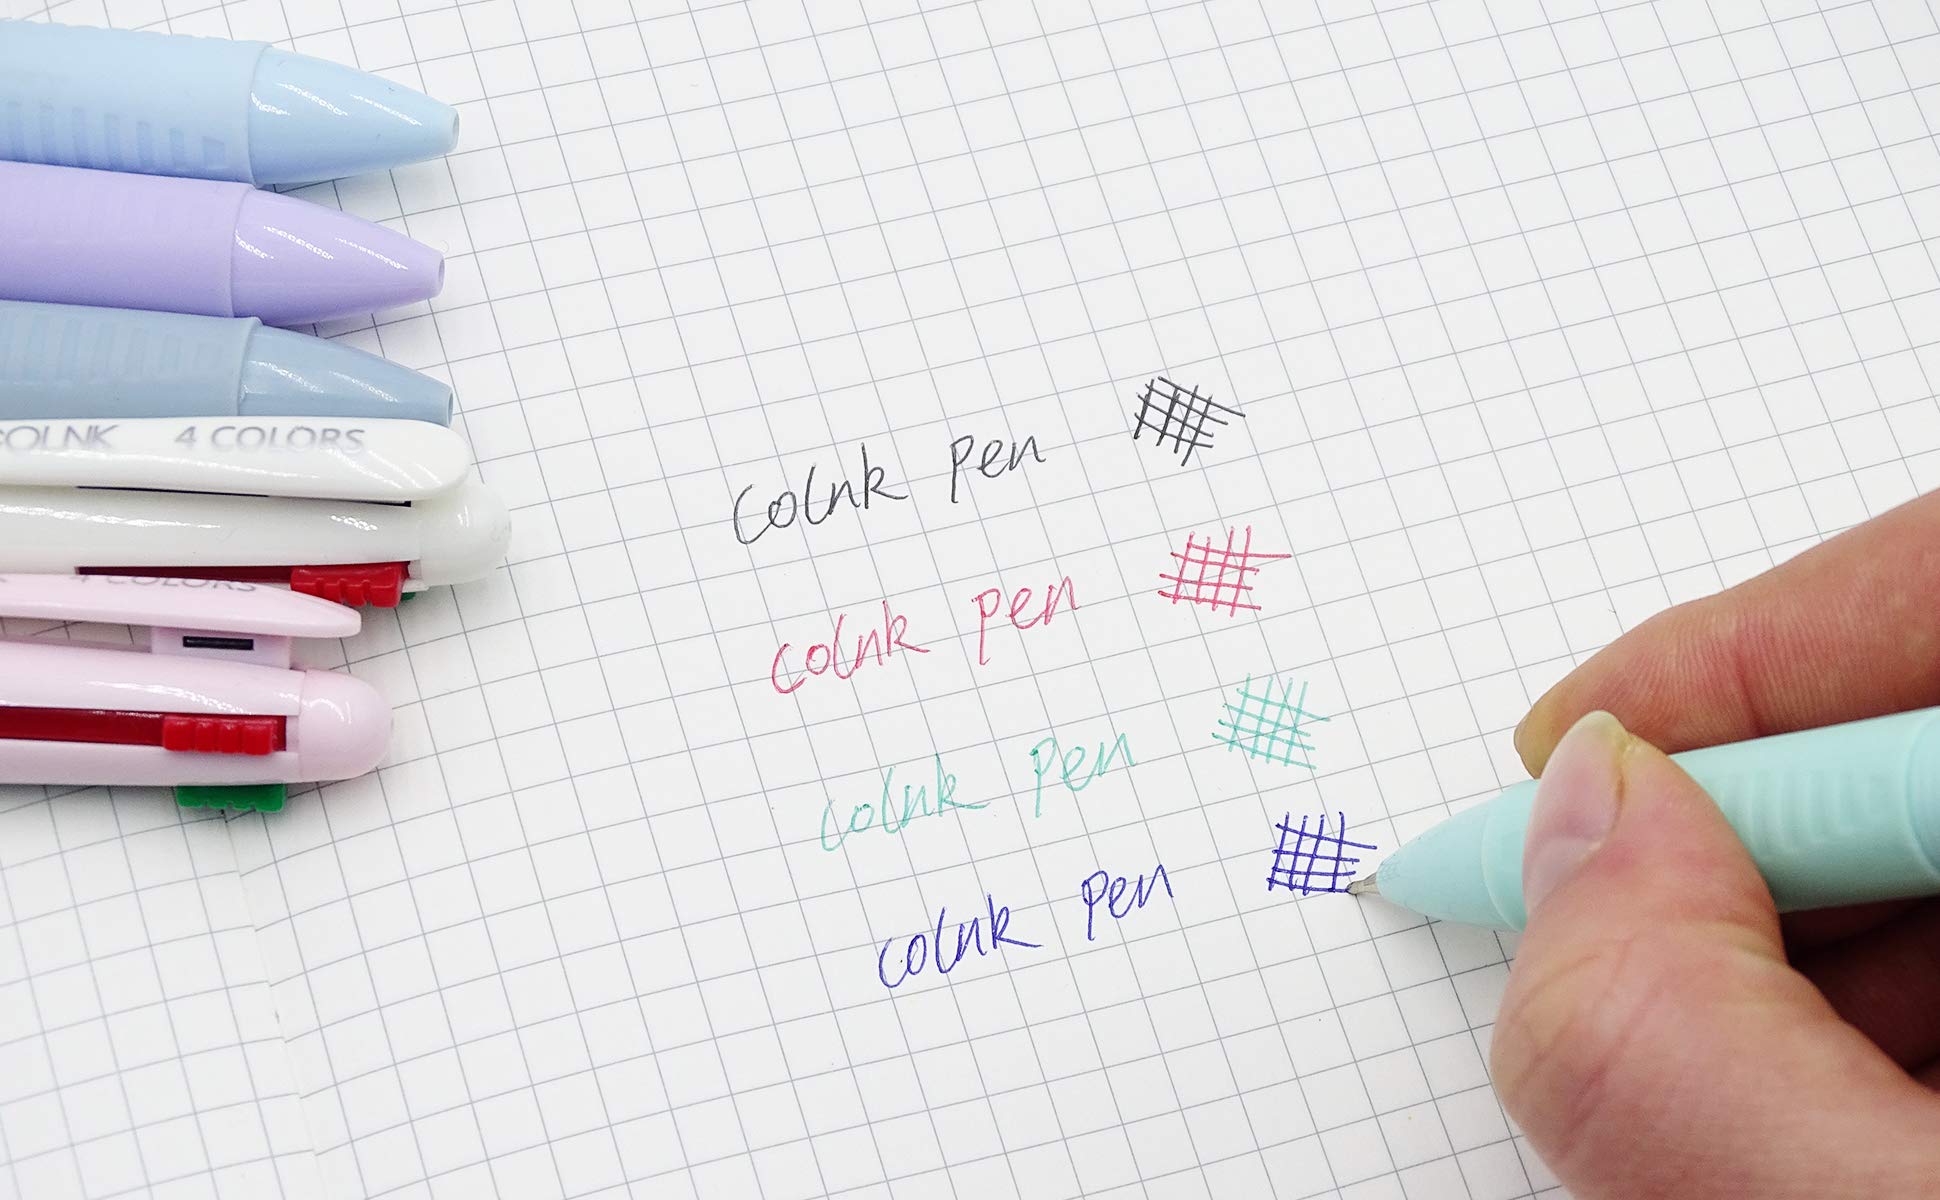 Gazdag Multicolor Ballpoint Pen 0.5, 4-in-1 Colored Pens Fine